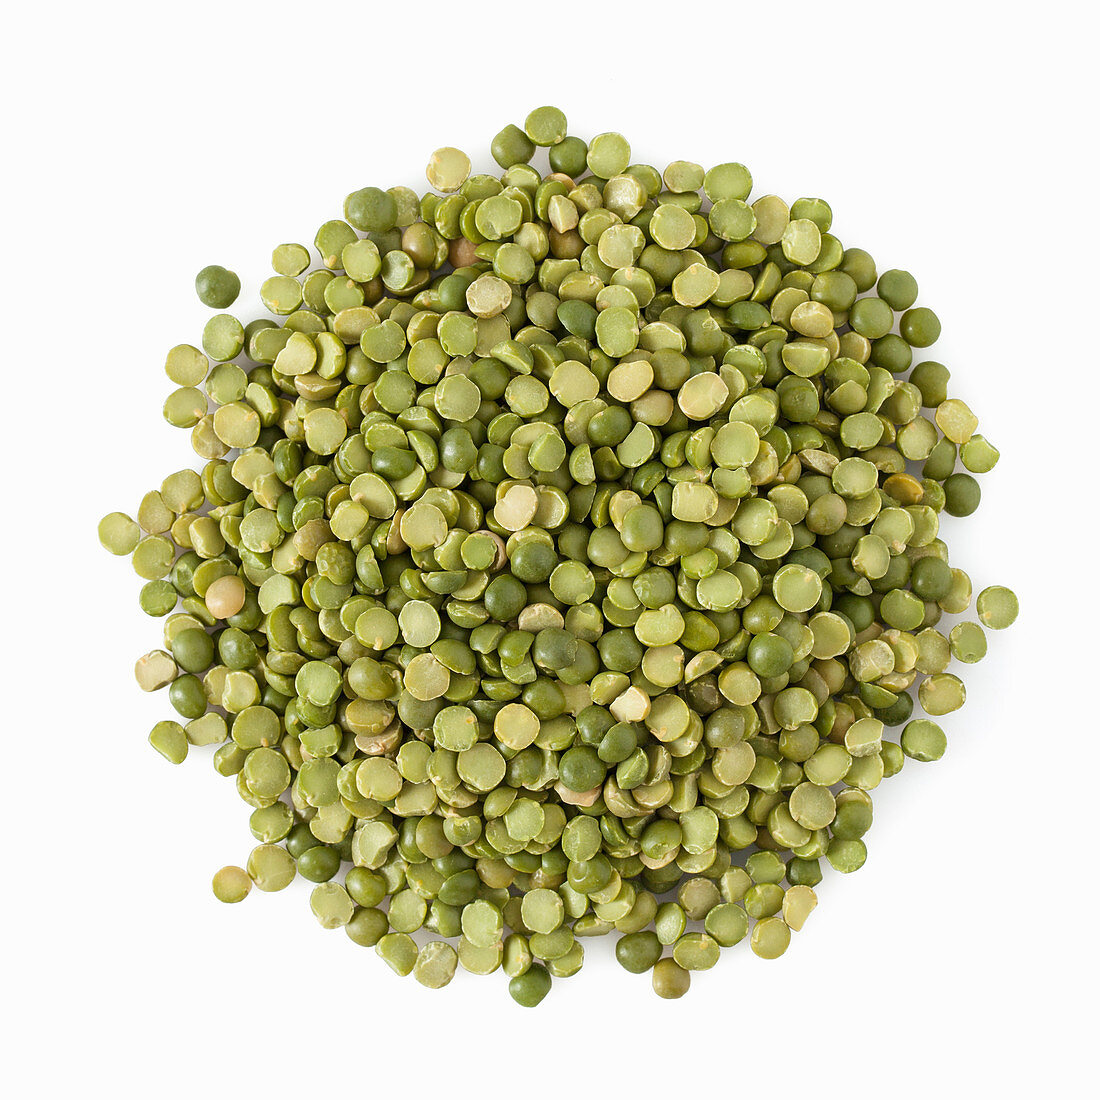 Green split peas isolated on white background